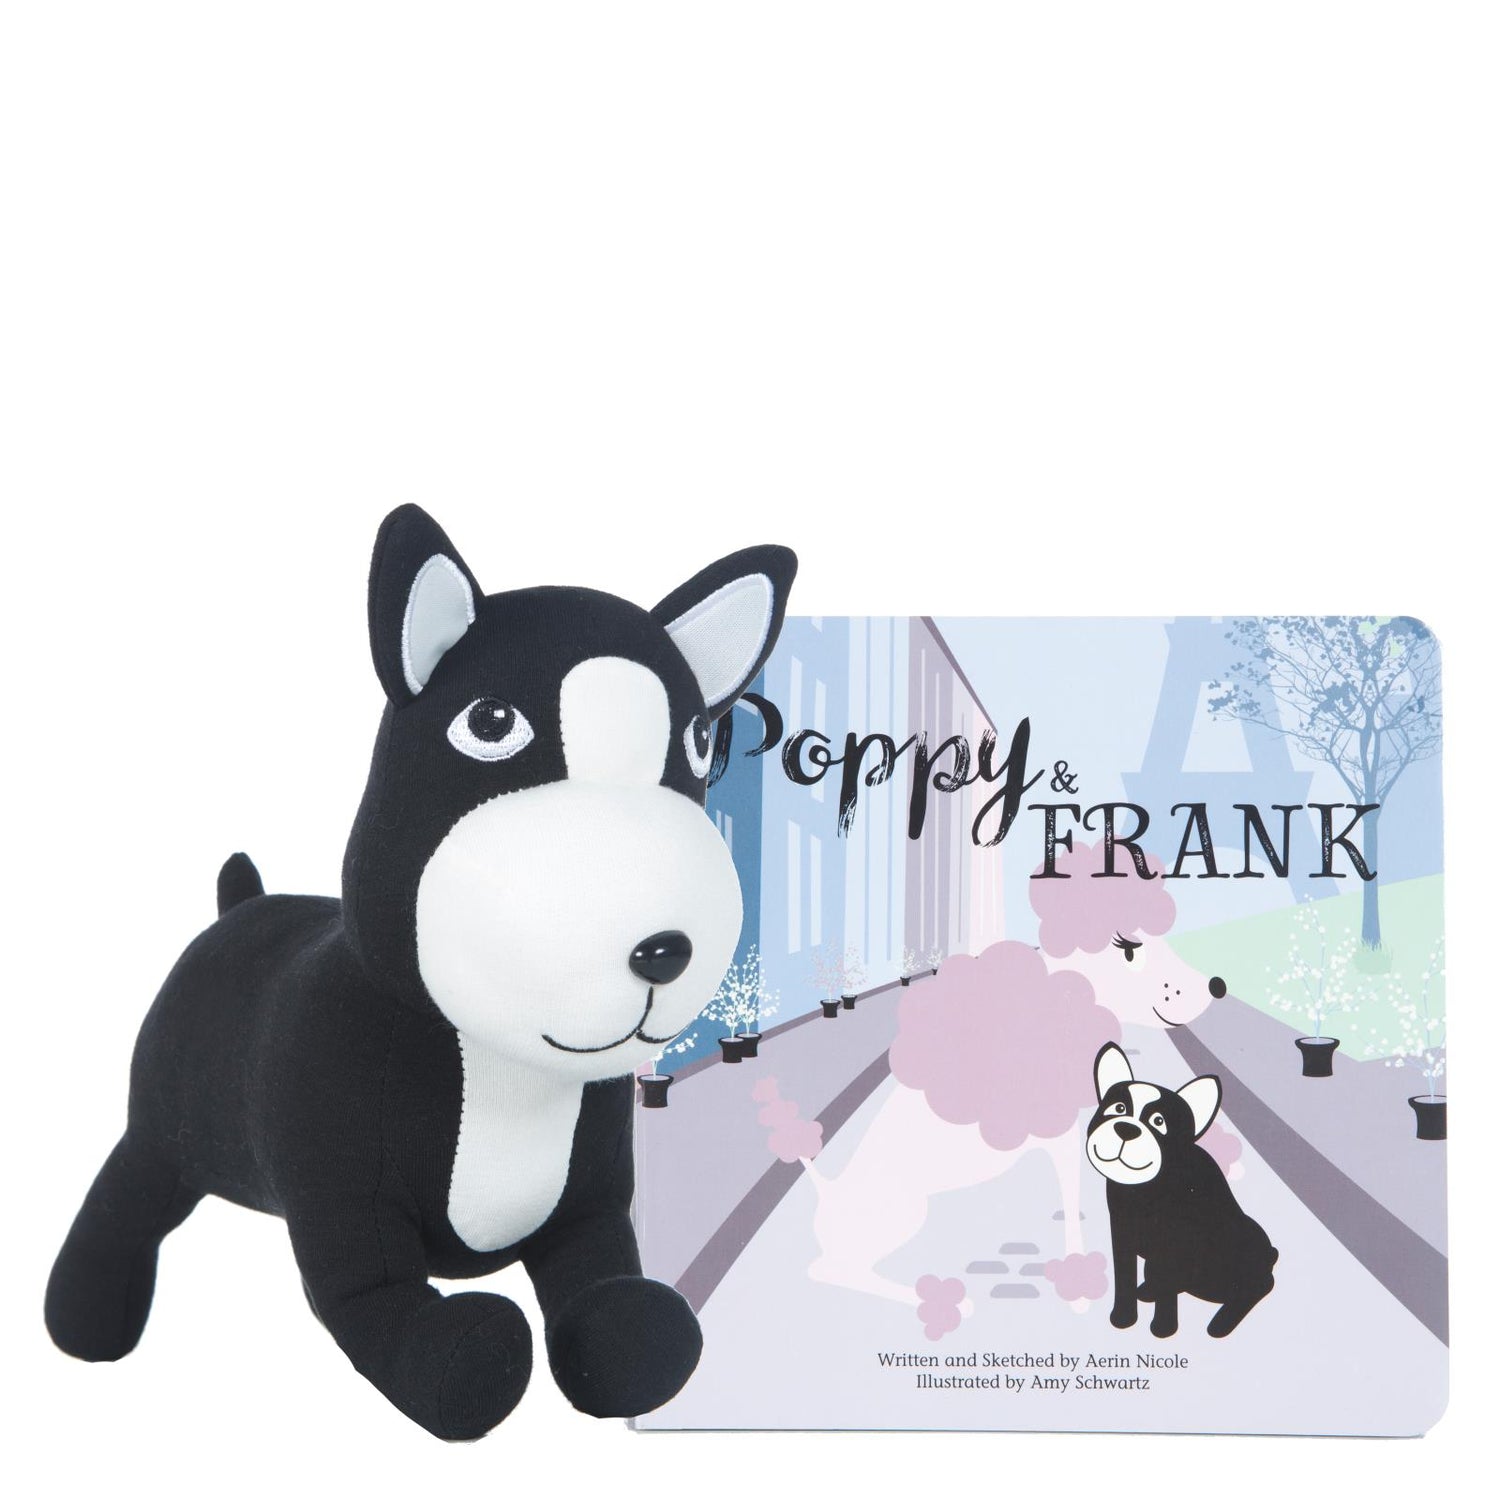 Book & Plush Combo in Poppy & Frank with Frank the Bulldog Plush